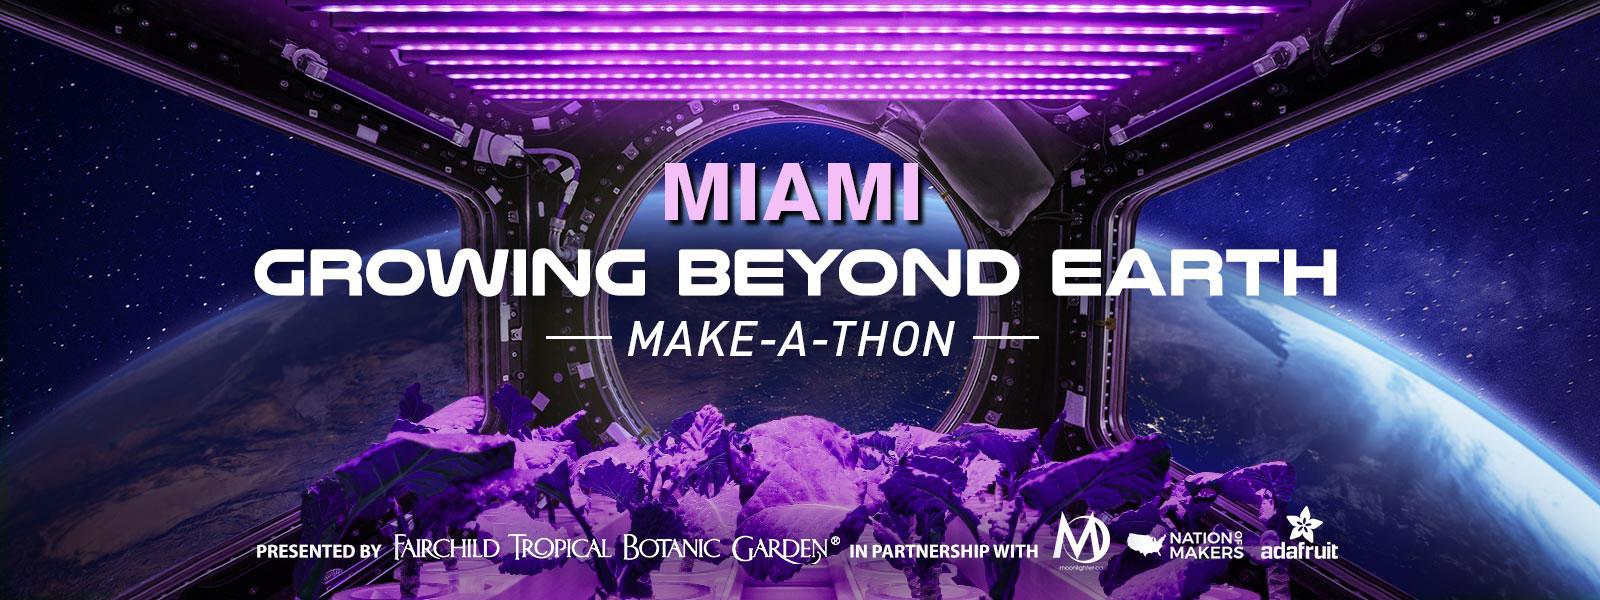 Miami Growing Beyond Earth Make-A-Thon